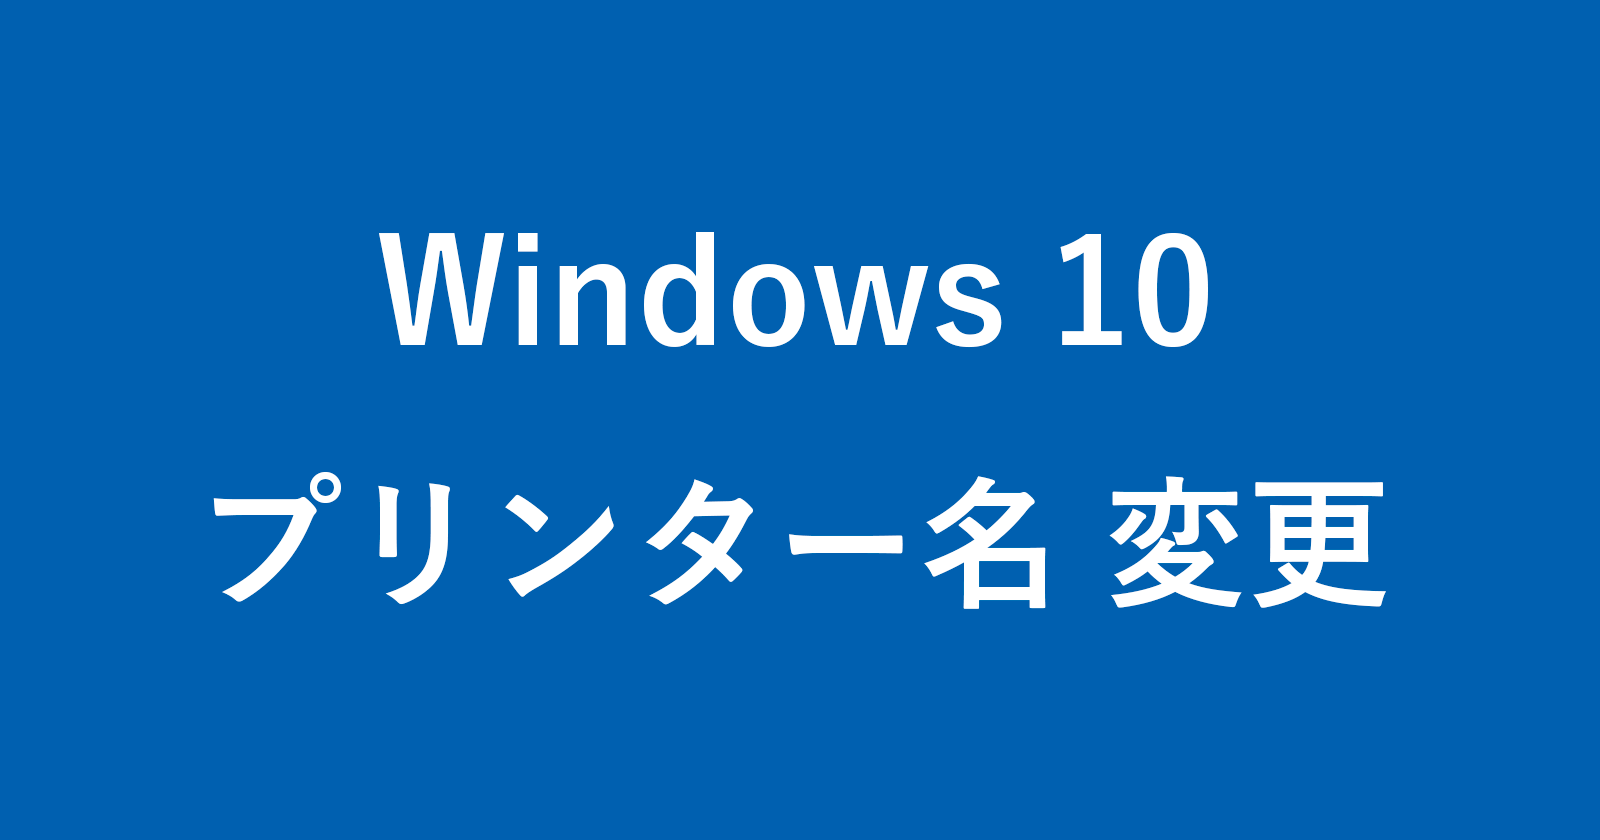 windows 10 printer name